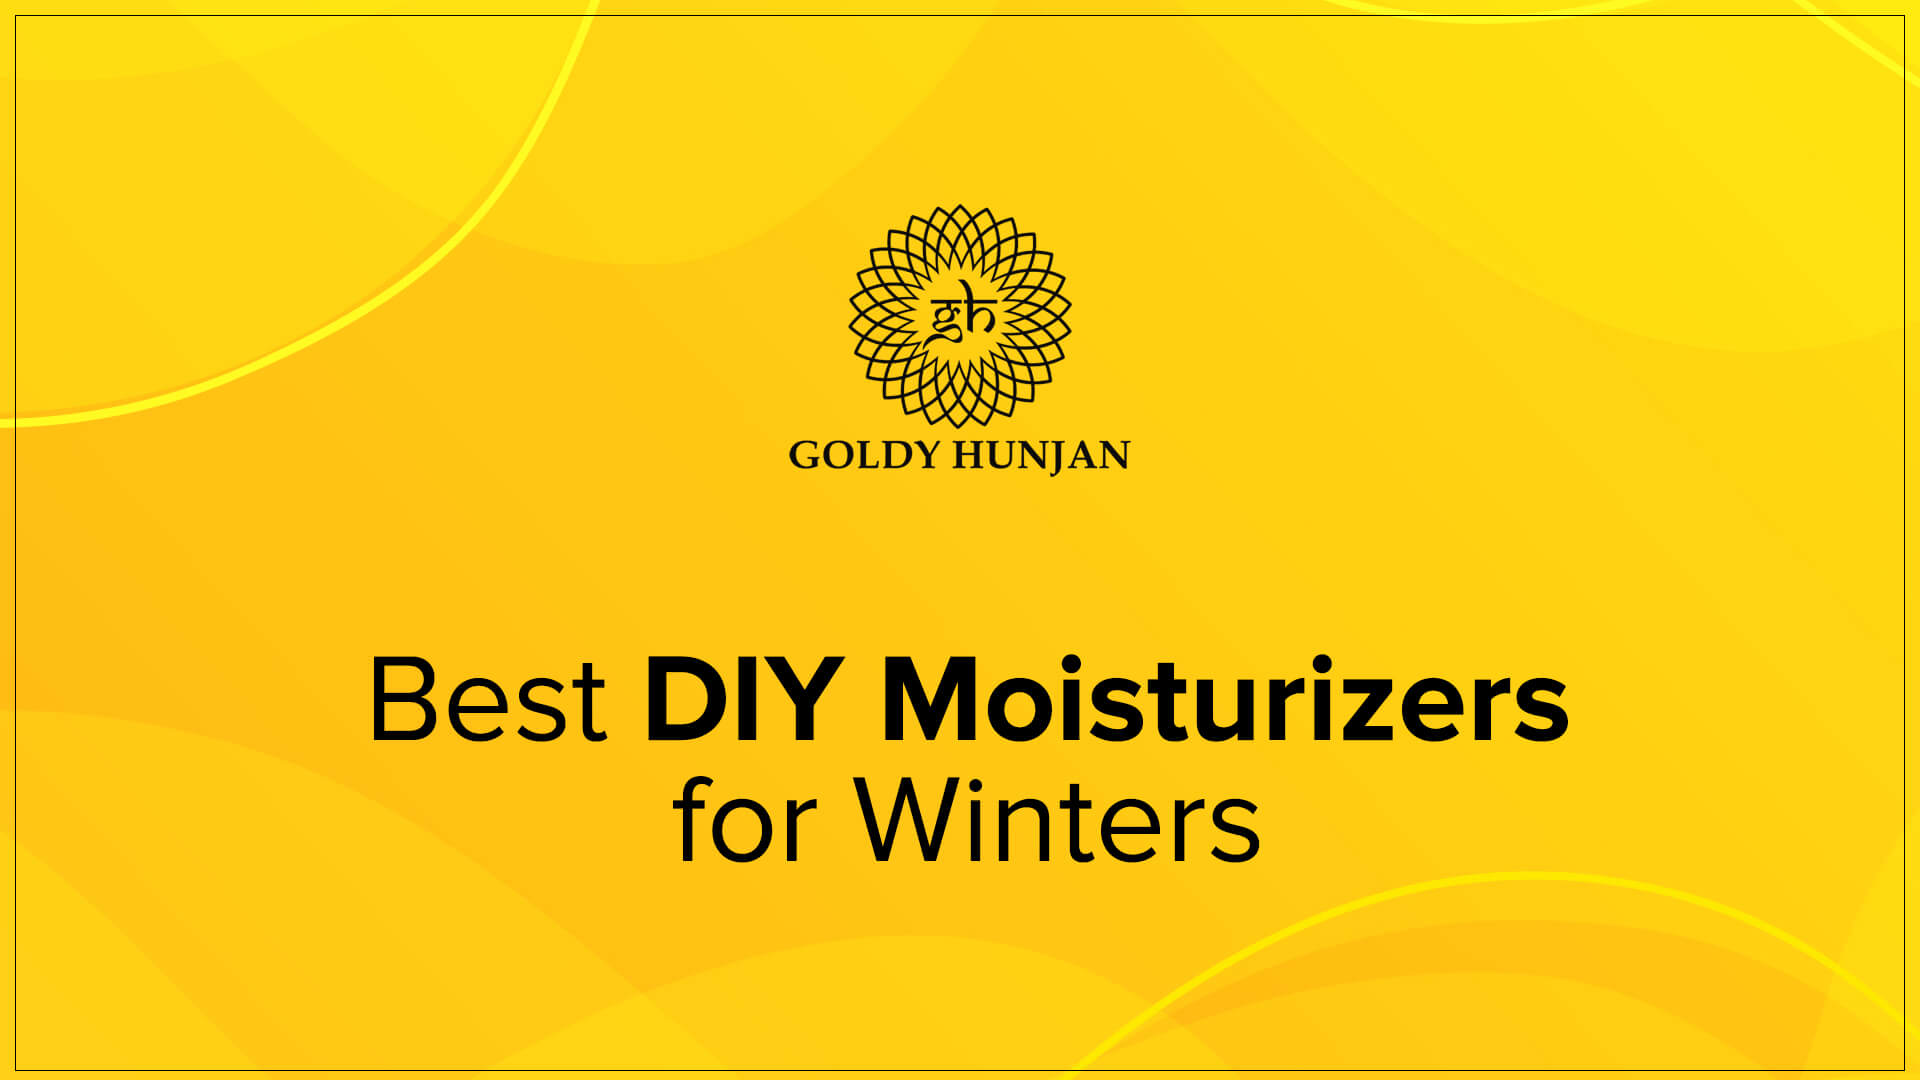 Best DIY moisturizers for winters